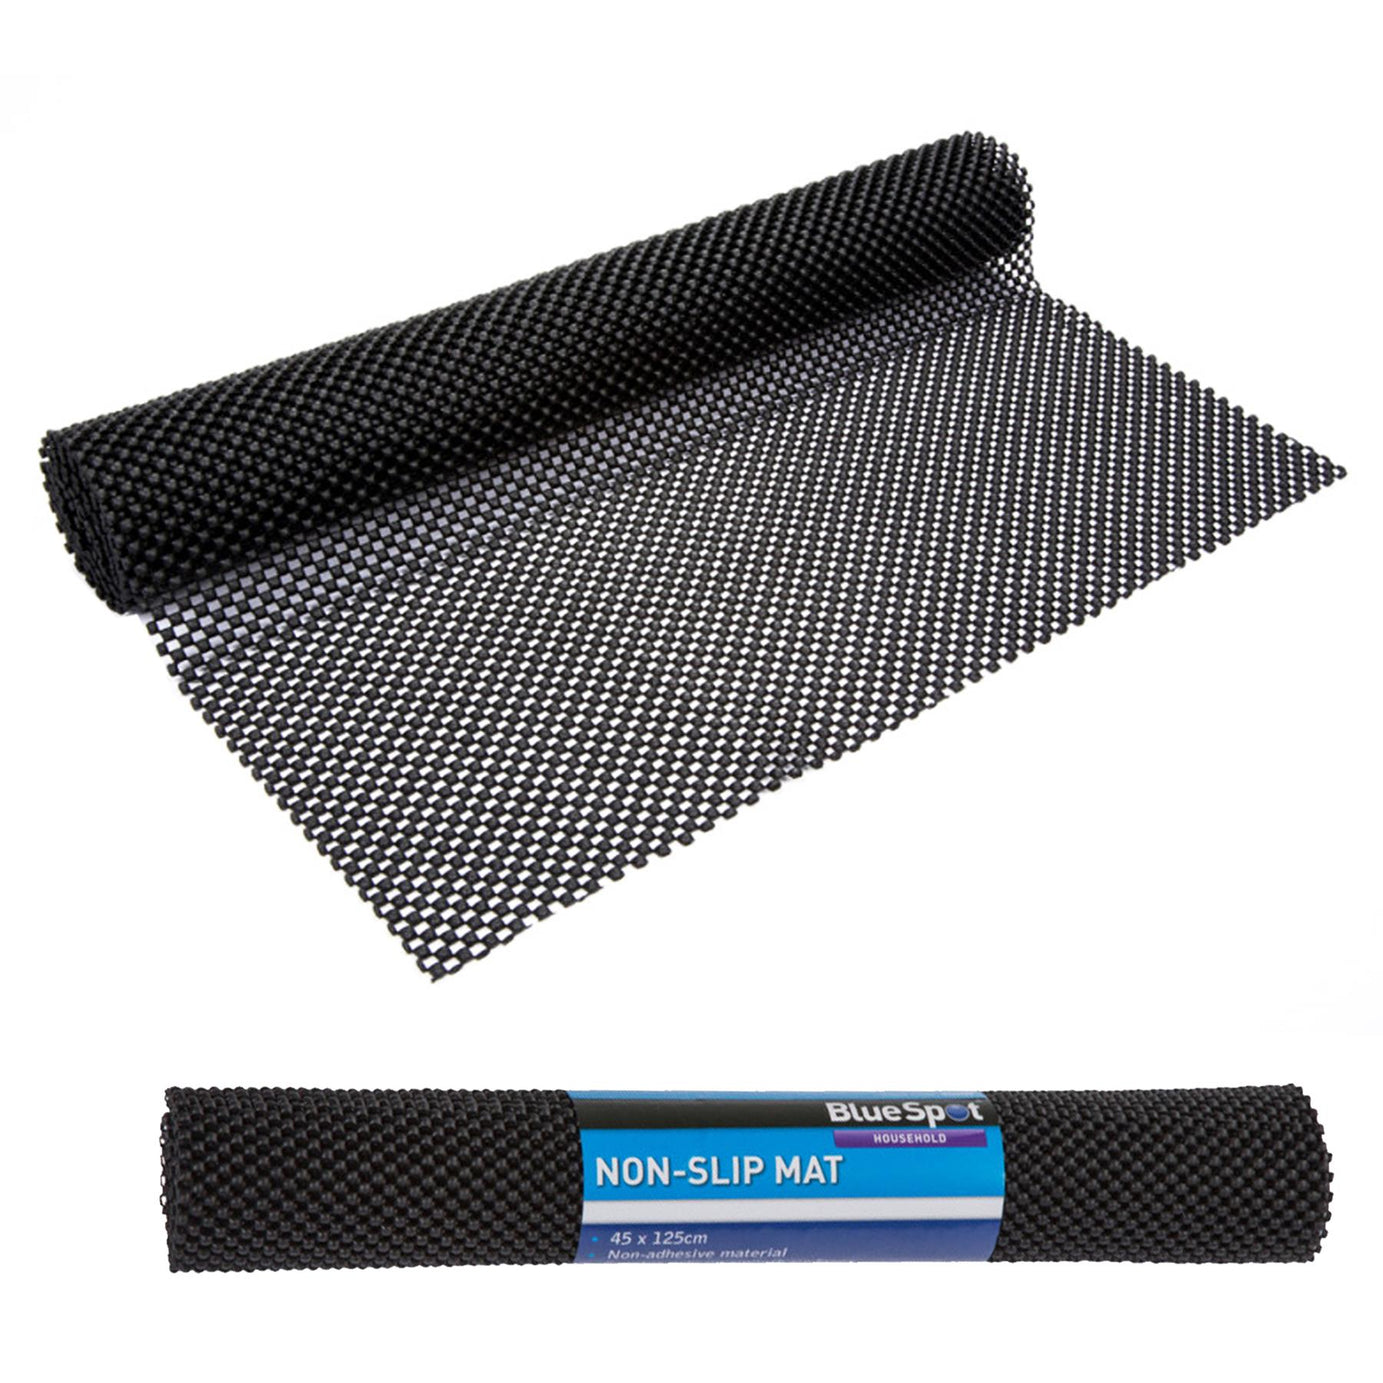 Bluespot Non-slip Grip Mat 45x125cm Work Surface Carpet Tool Box Chest Car Router